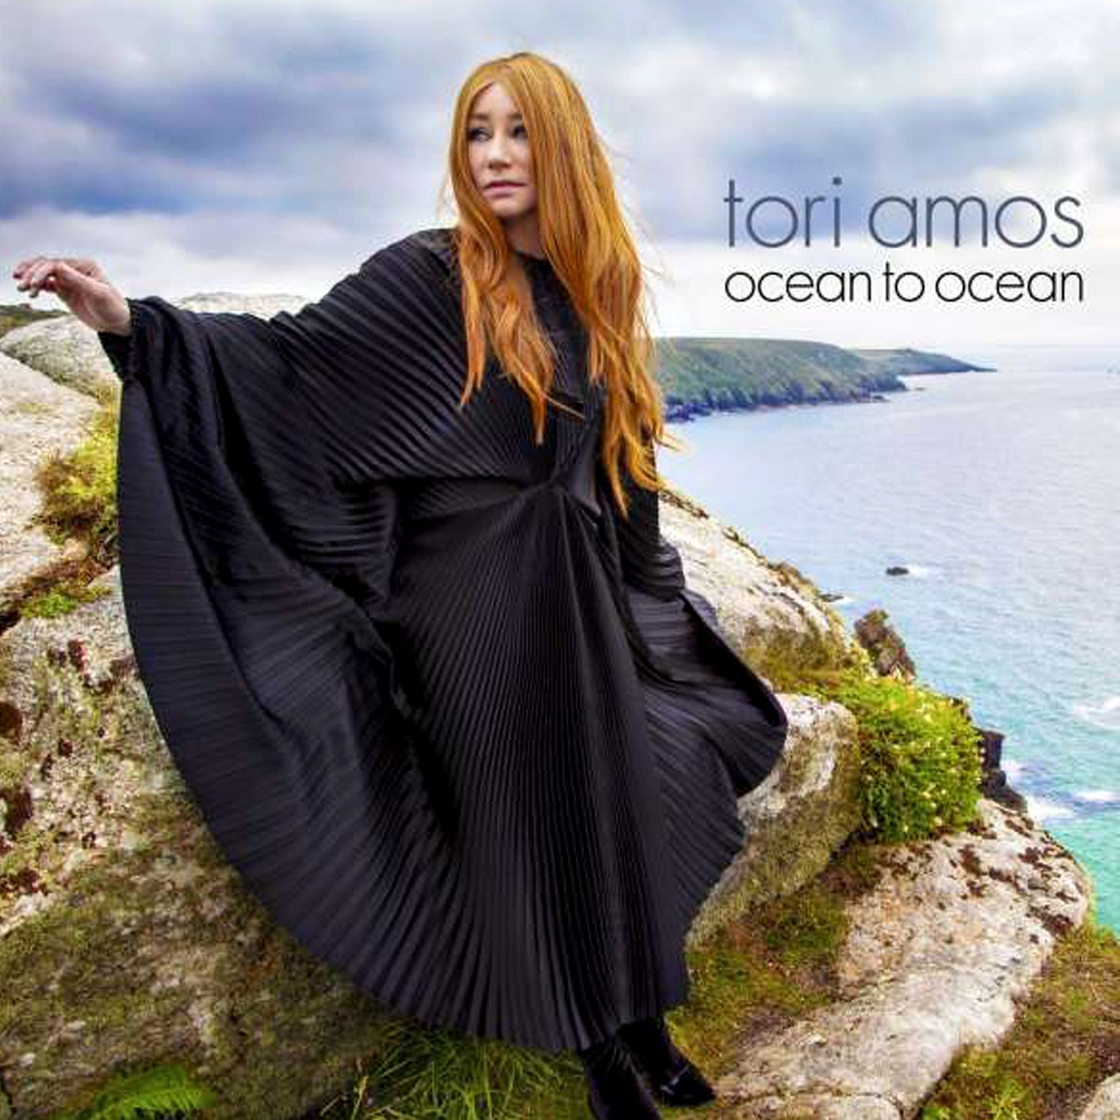 Albumcover Tori Amos "Ocean to ocean"